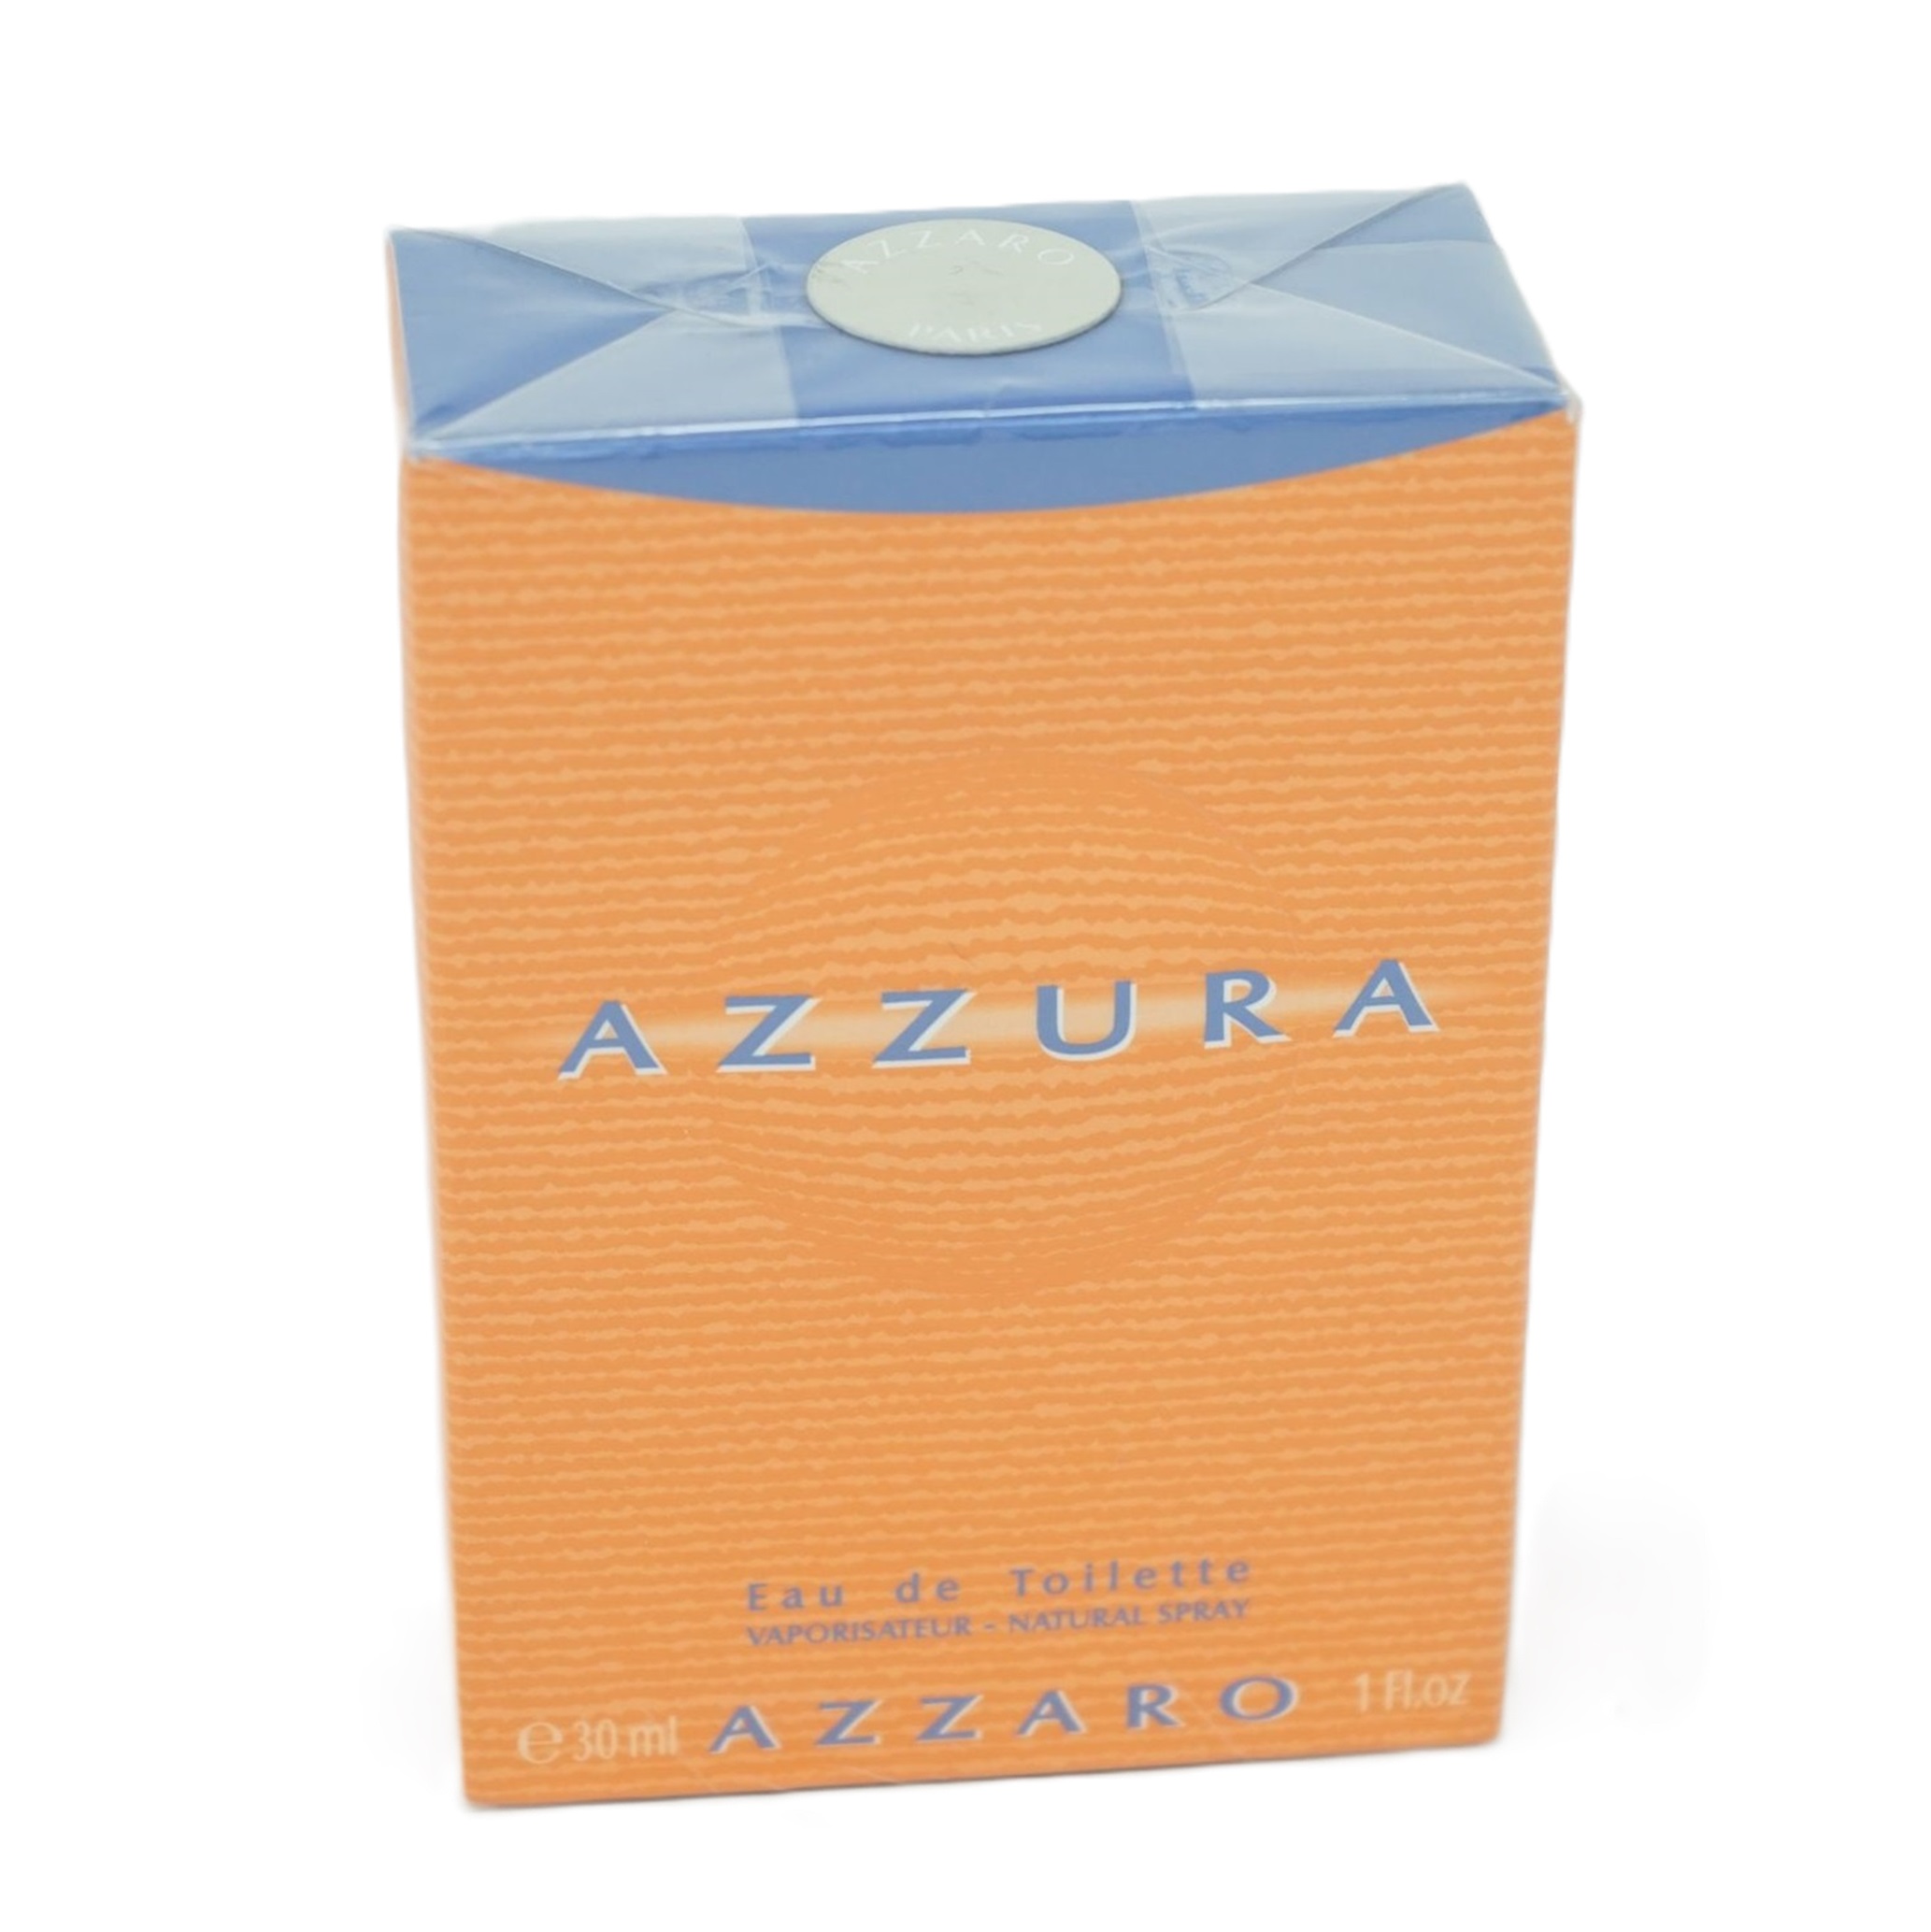 Azzaro Azzura Eau de Toilette Spray 30ml